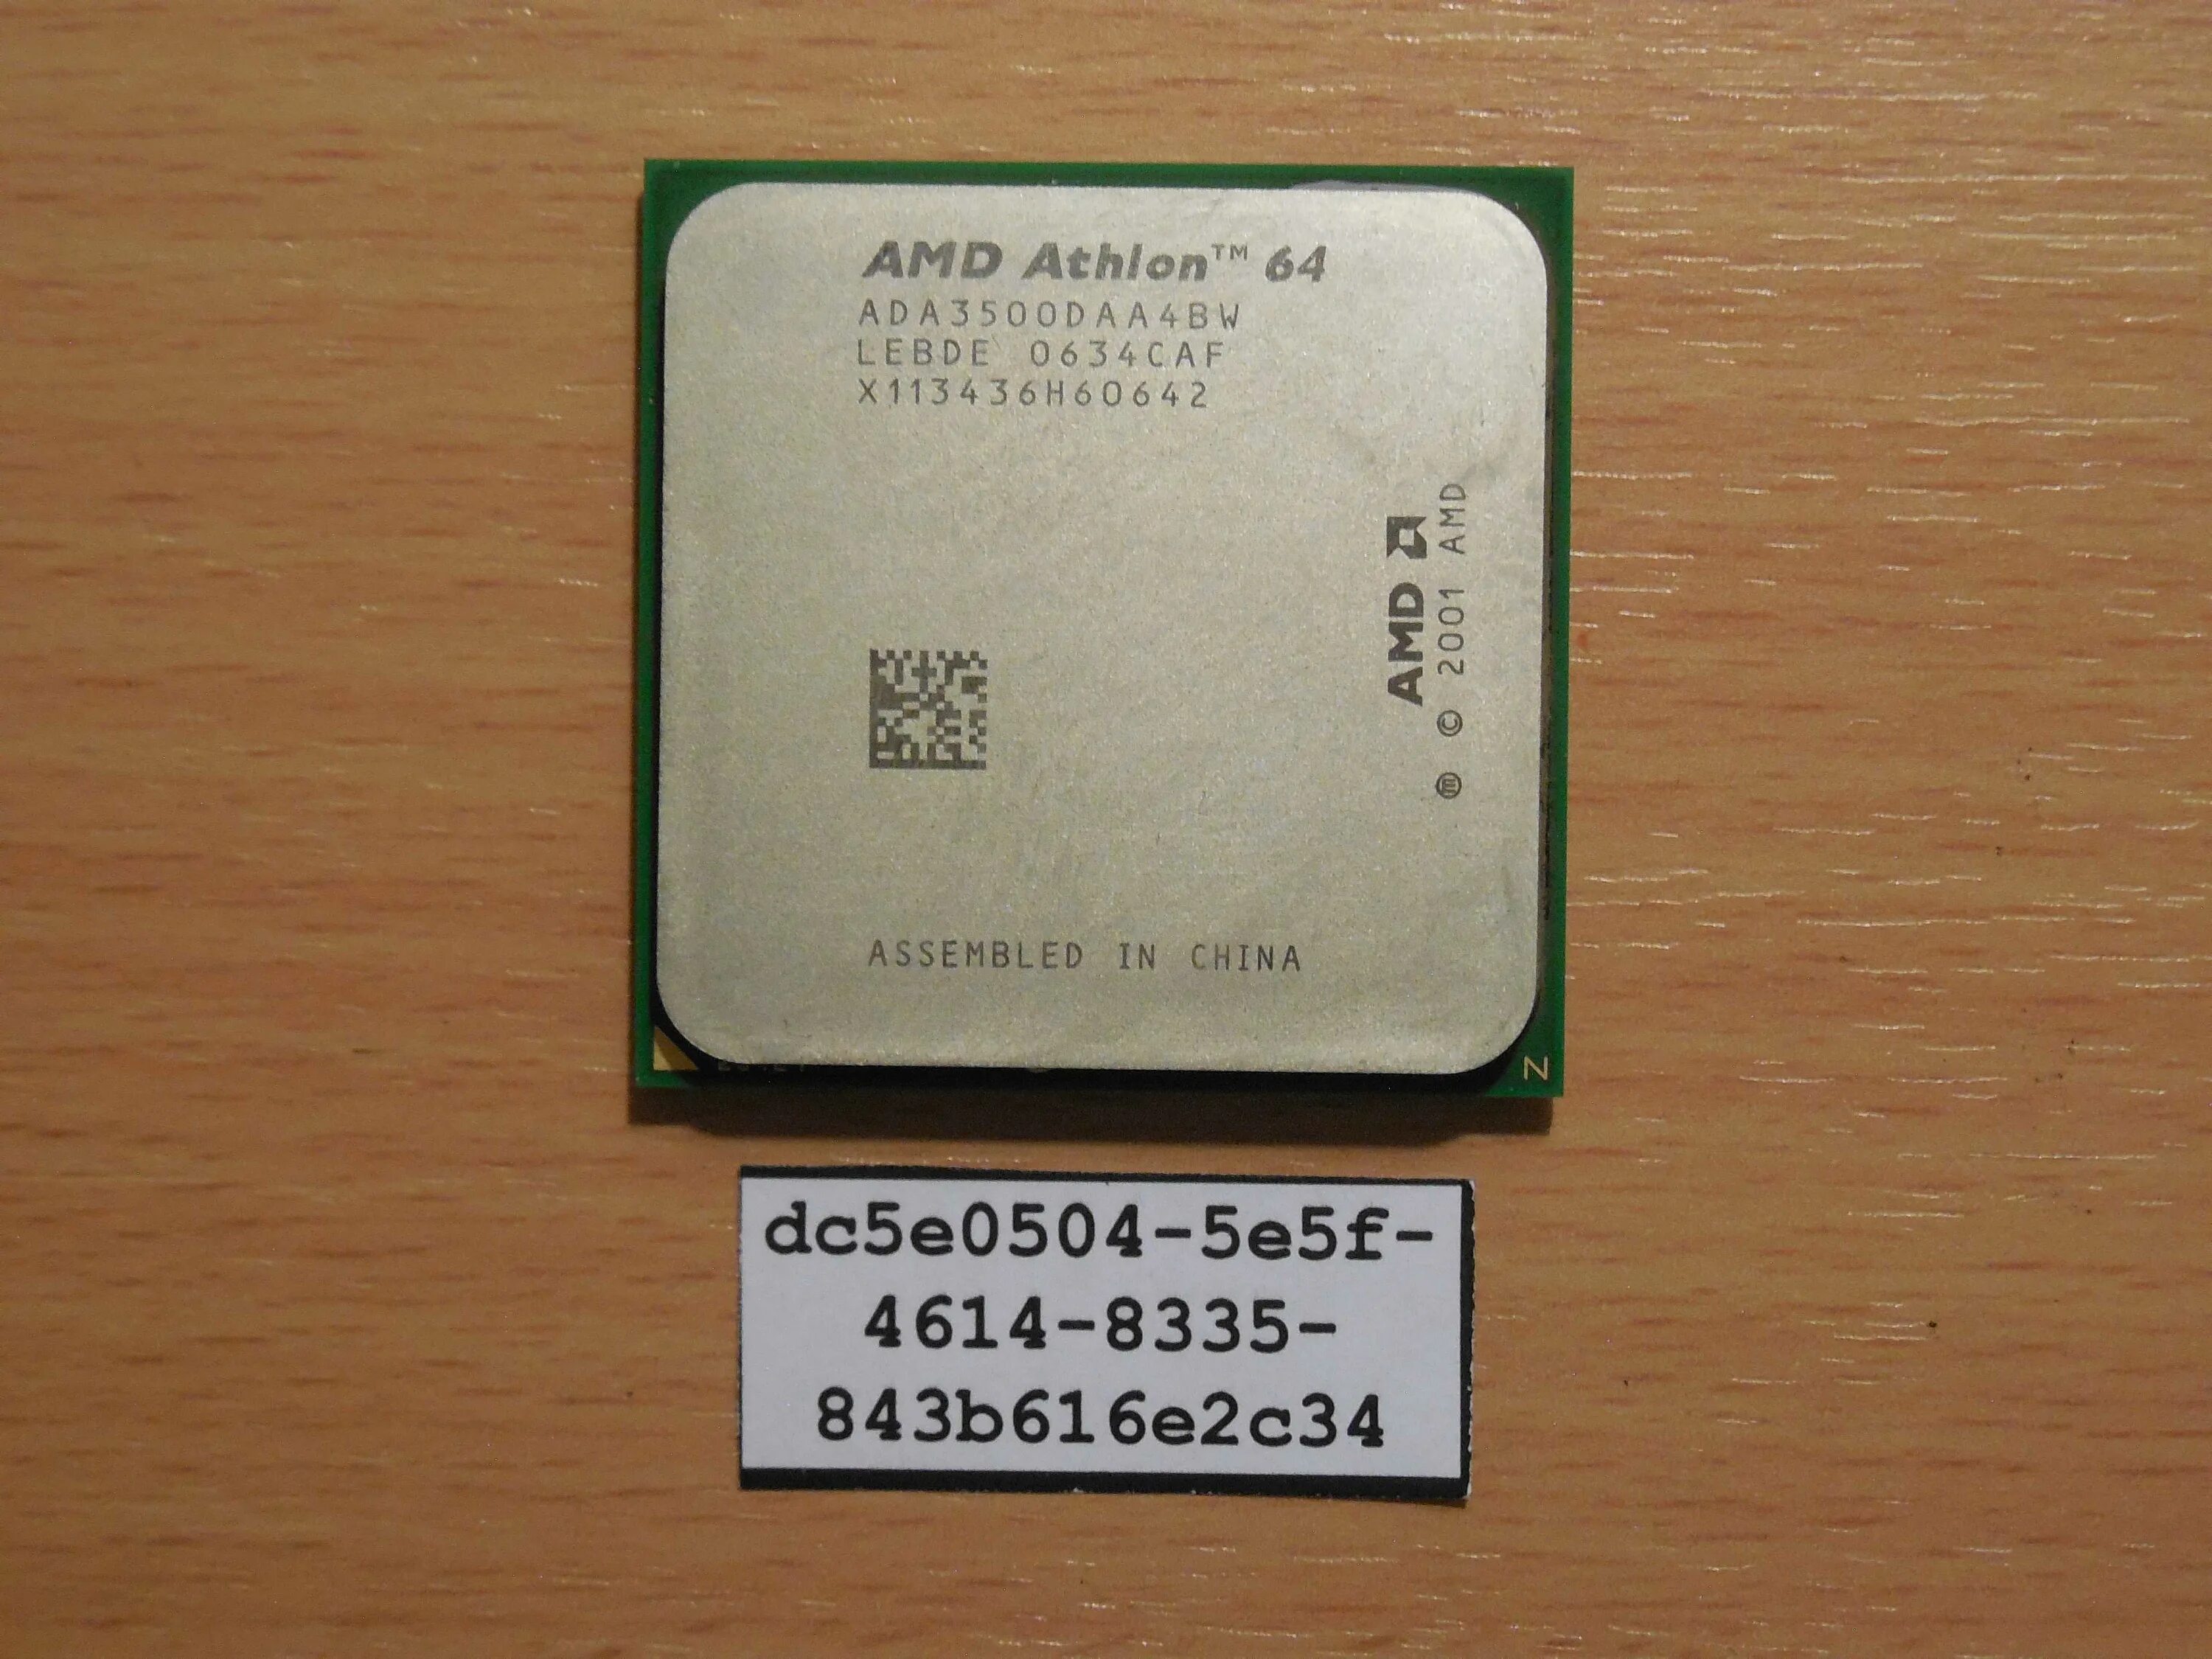 Athlon 64 купить. Процессор AMD Athlon 64 Socket 939. AMD Athlon 64 ada3500daa4bw. AMD Athlon 64 Processor 3500+. AMD Athlon 64 ada3800iaa4cw.